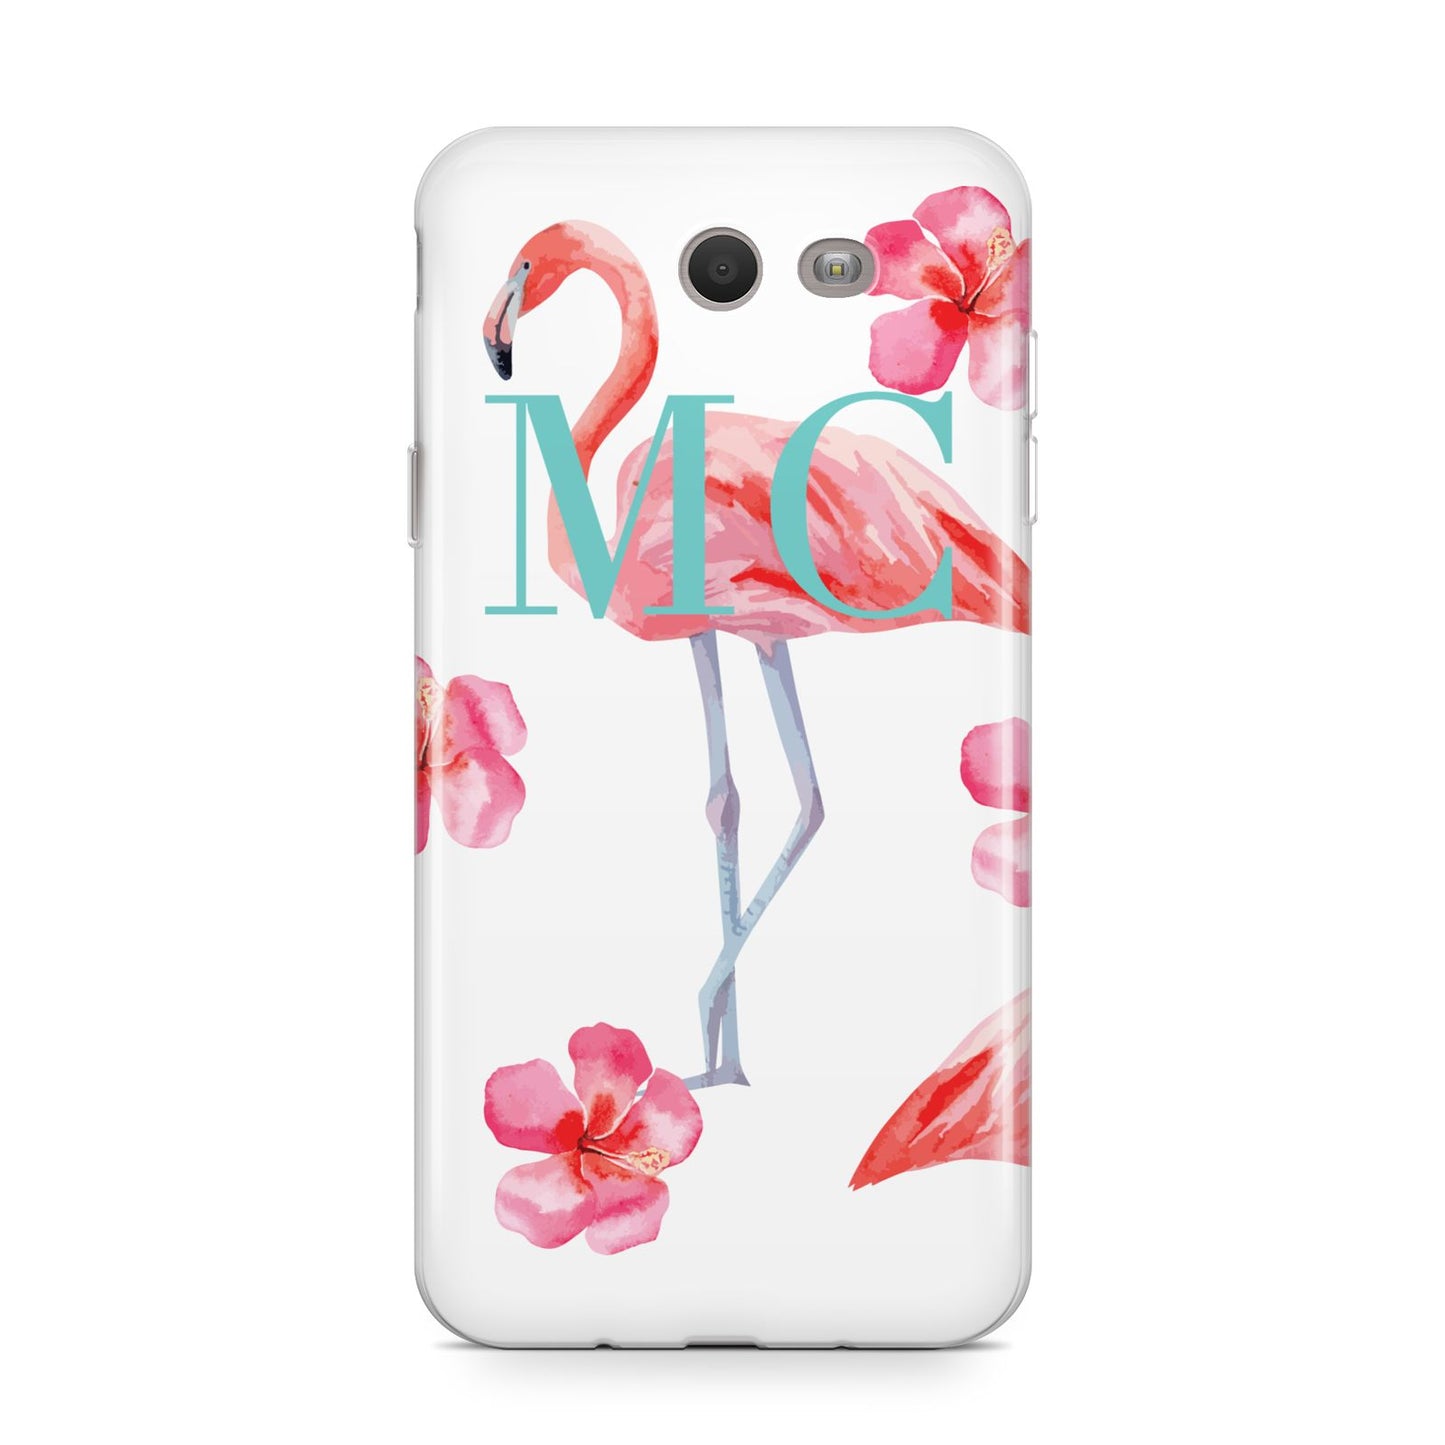 Personalised Initials Flamingo 3 Samsung Galaxy J7 2017 Case